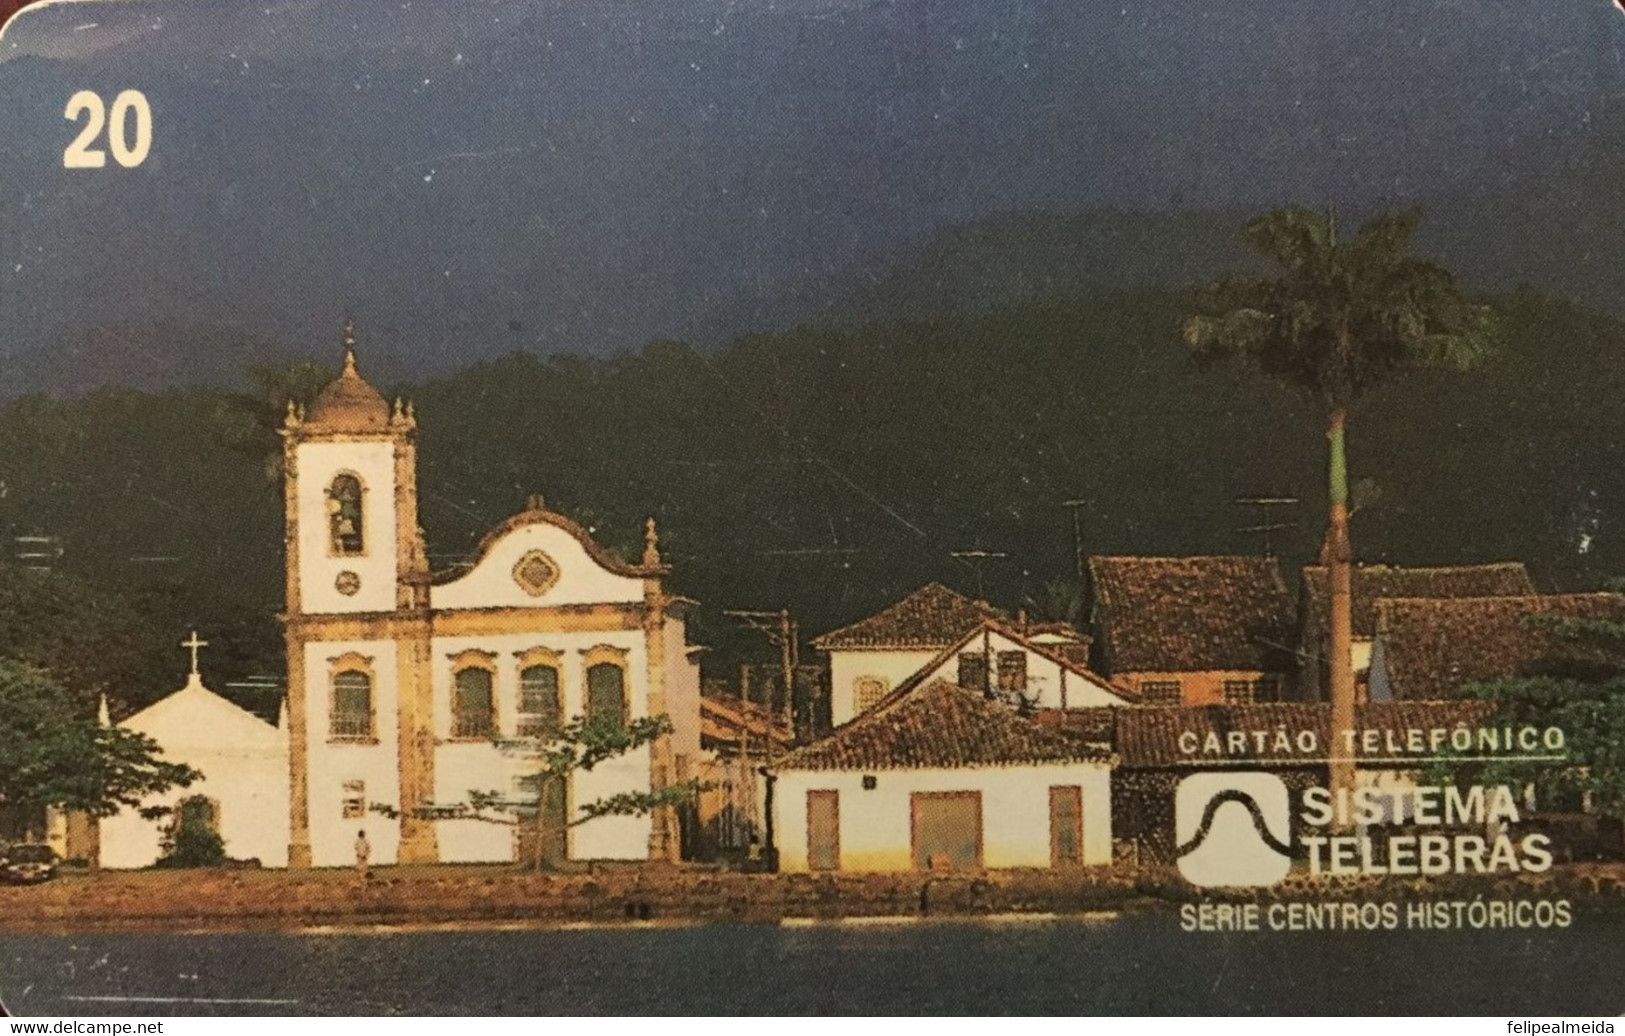 Phone Card Manufactured By Telebrasr In 1997 - Series Historic Centers - Parati, Rio De Janeiro - Instituto Do Patrimôni - Cultural